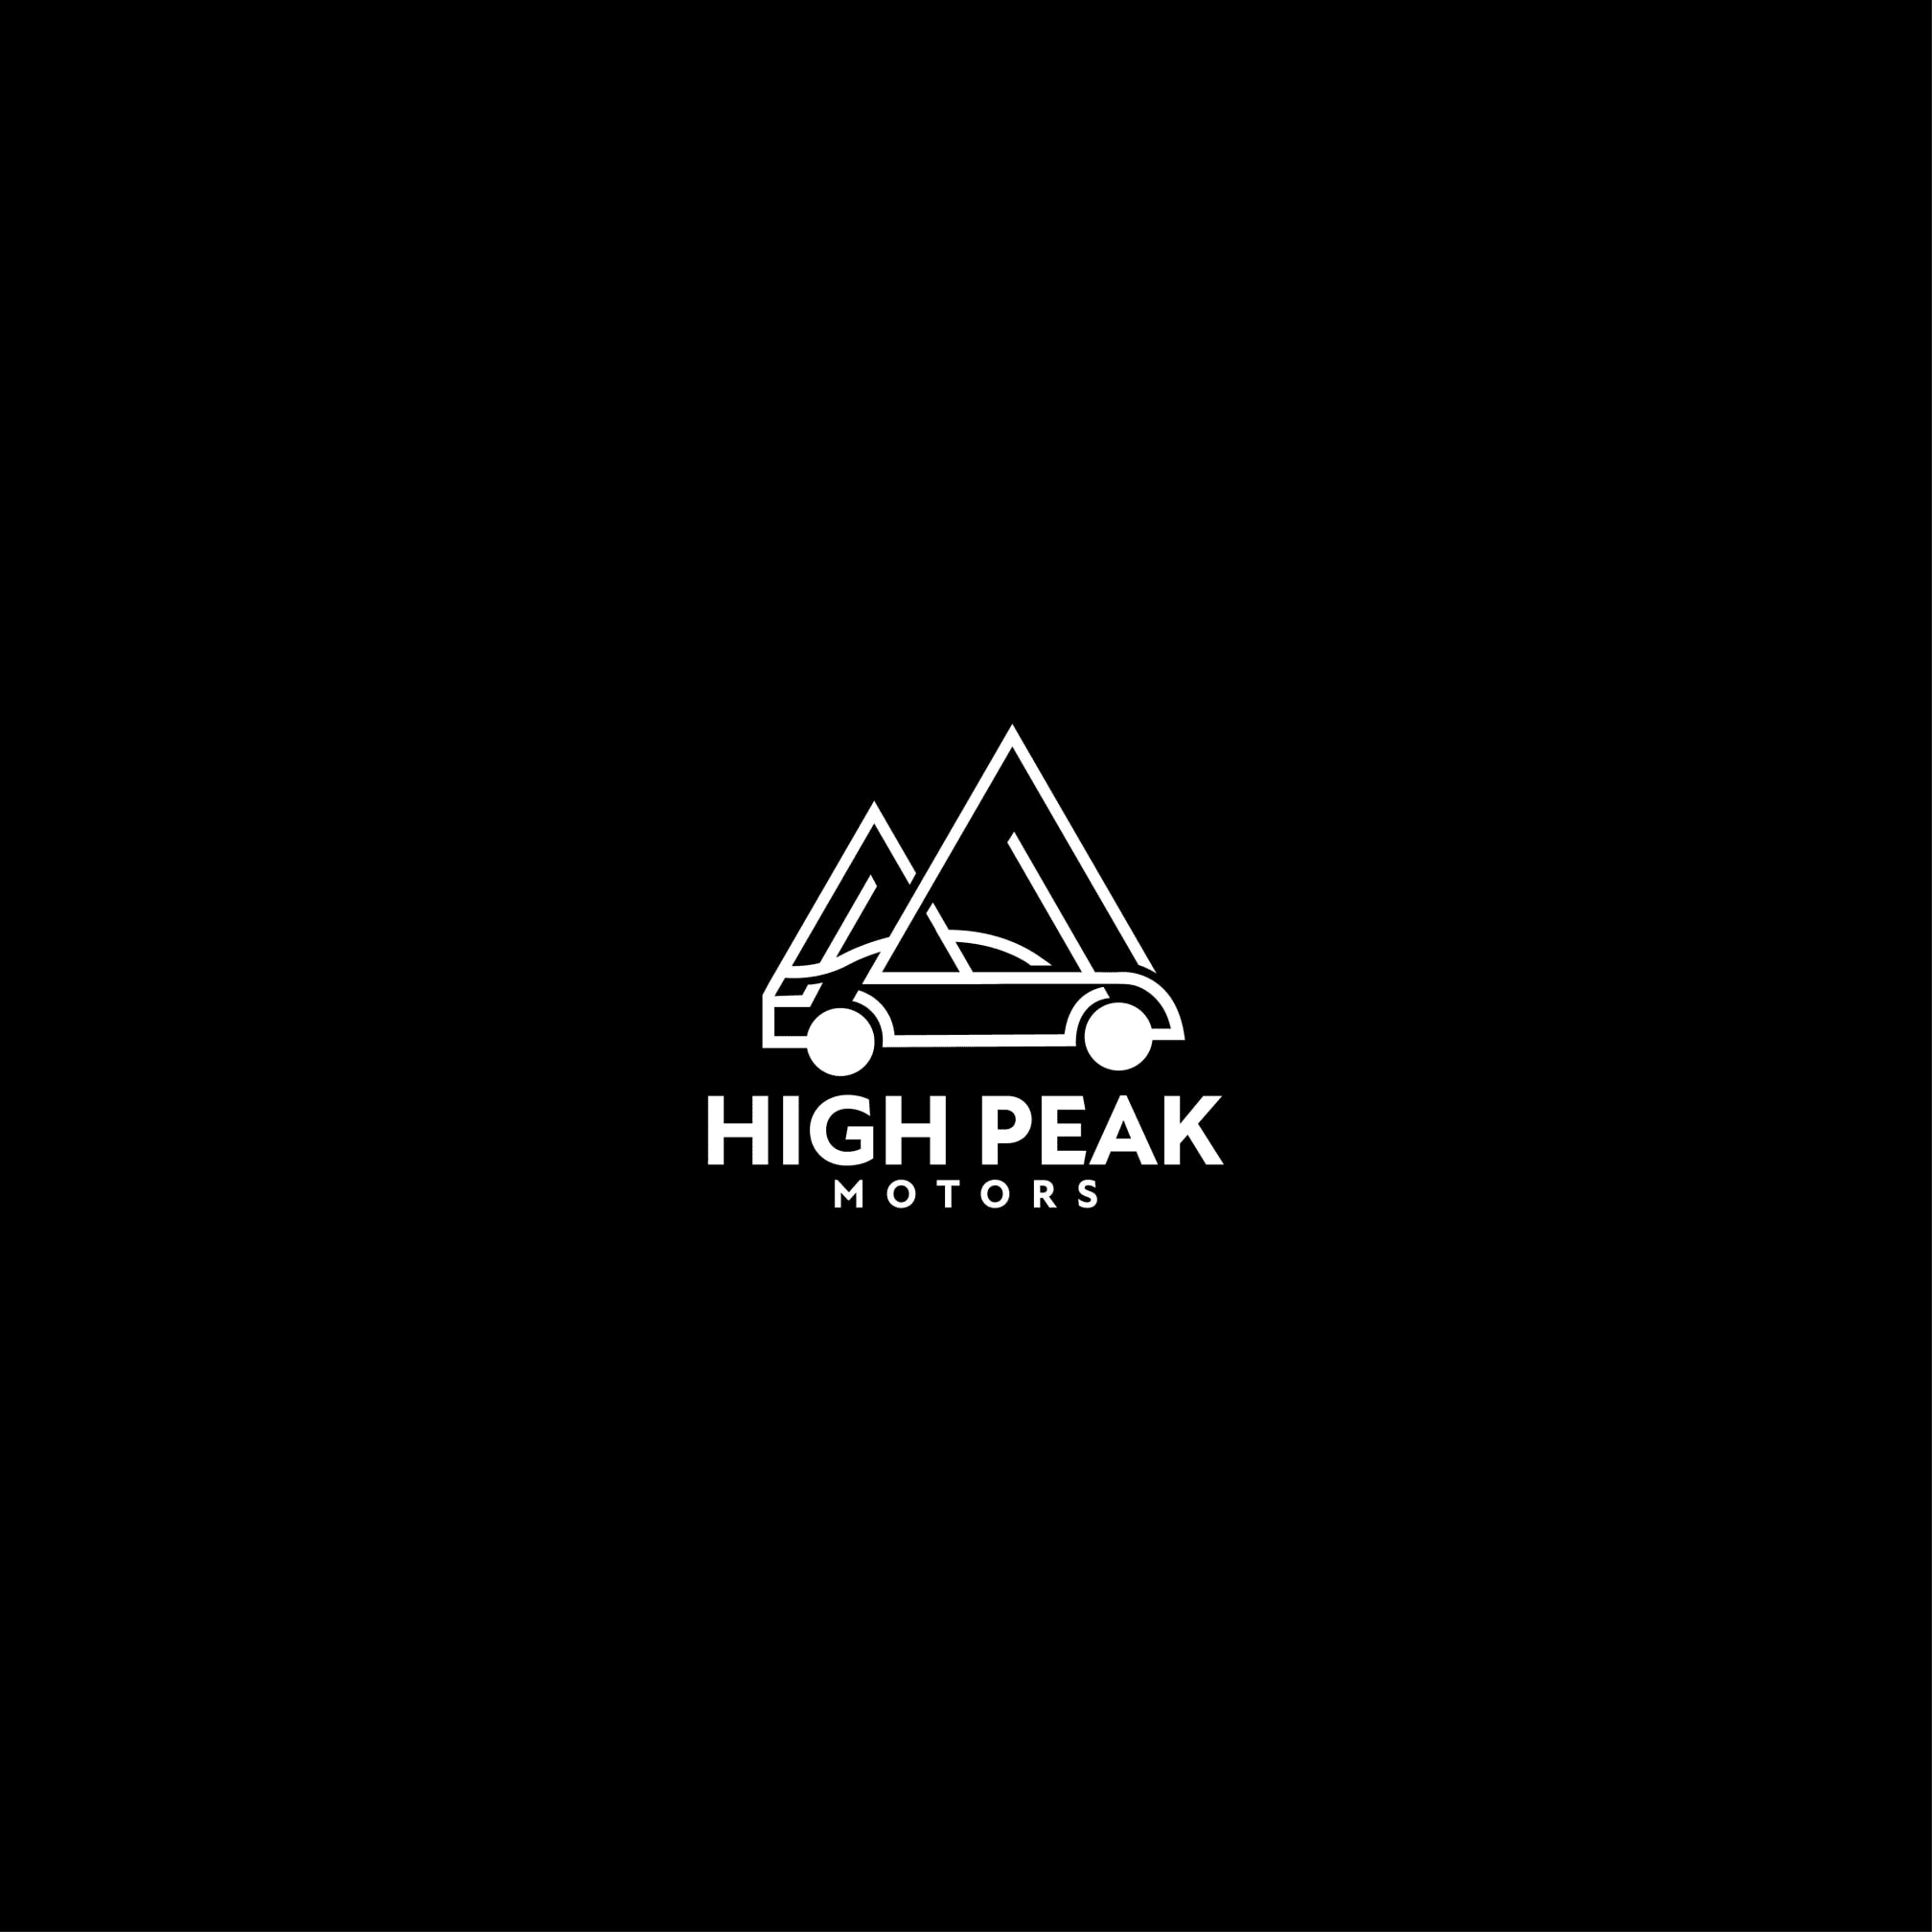 High Peak Motors - High Peak, Derbyshire SK22 4PN - 07930 001007 | ShowMeLocal.com